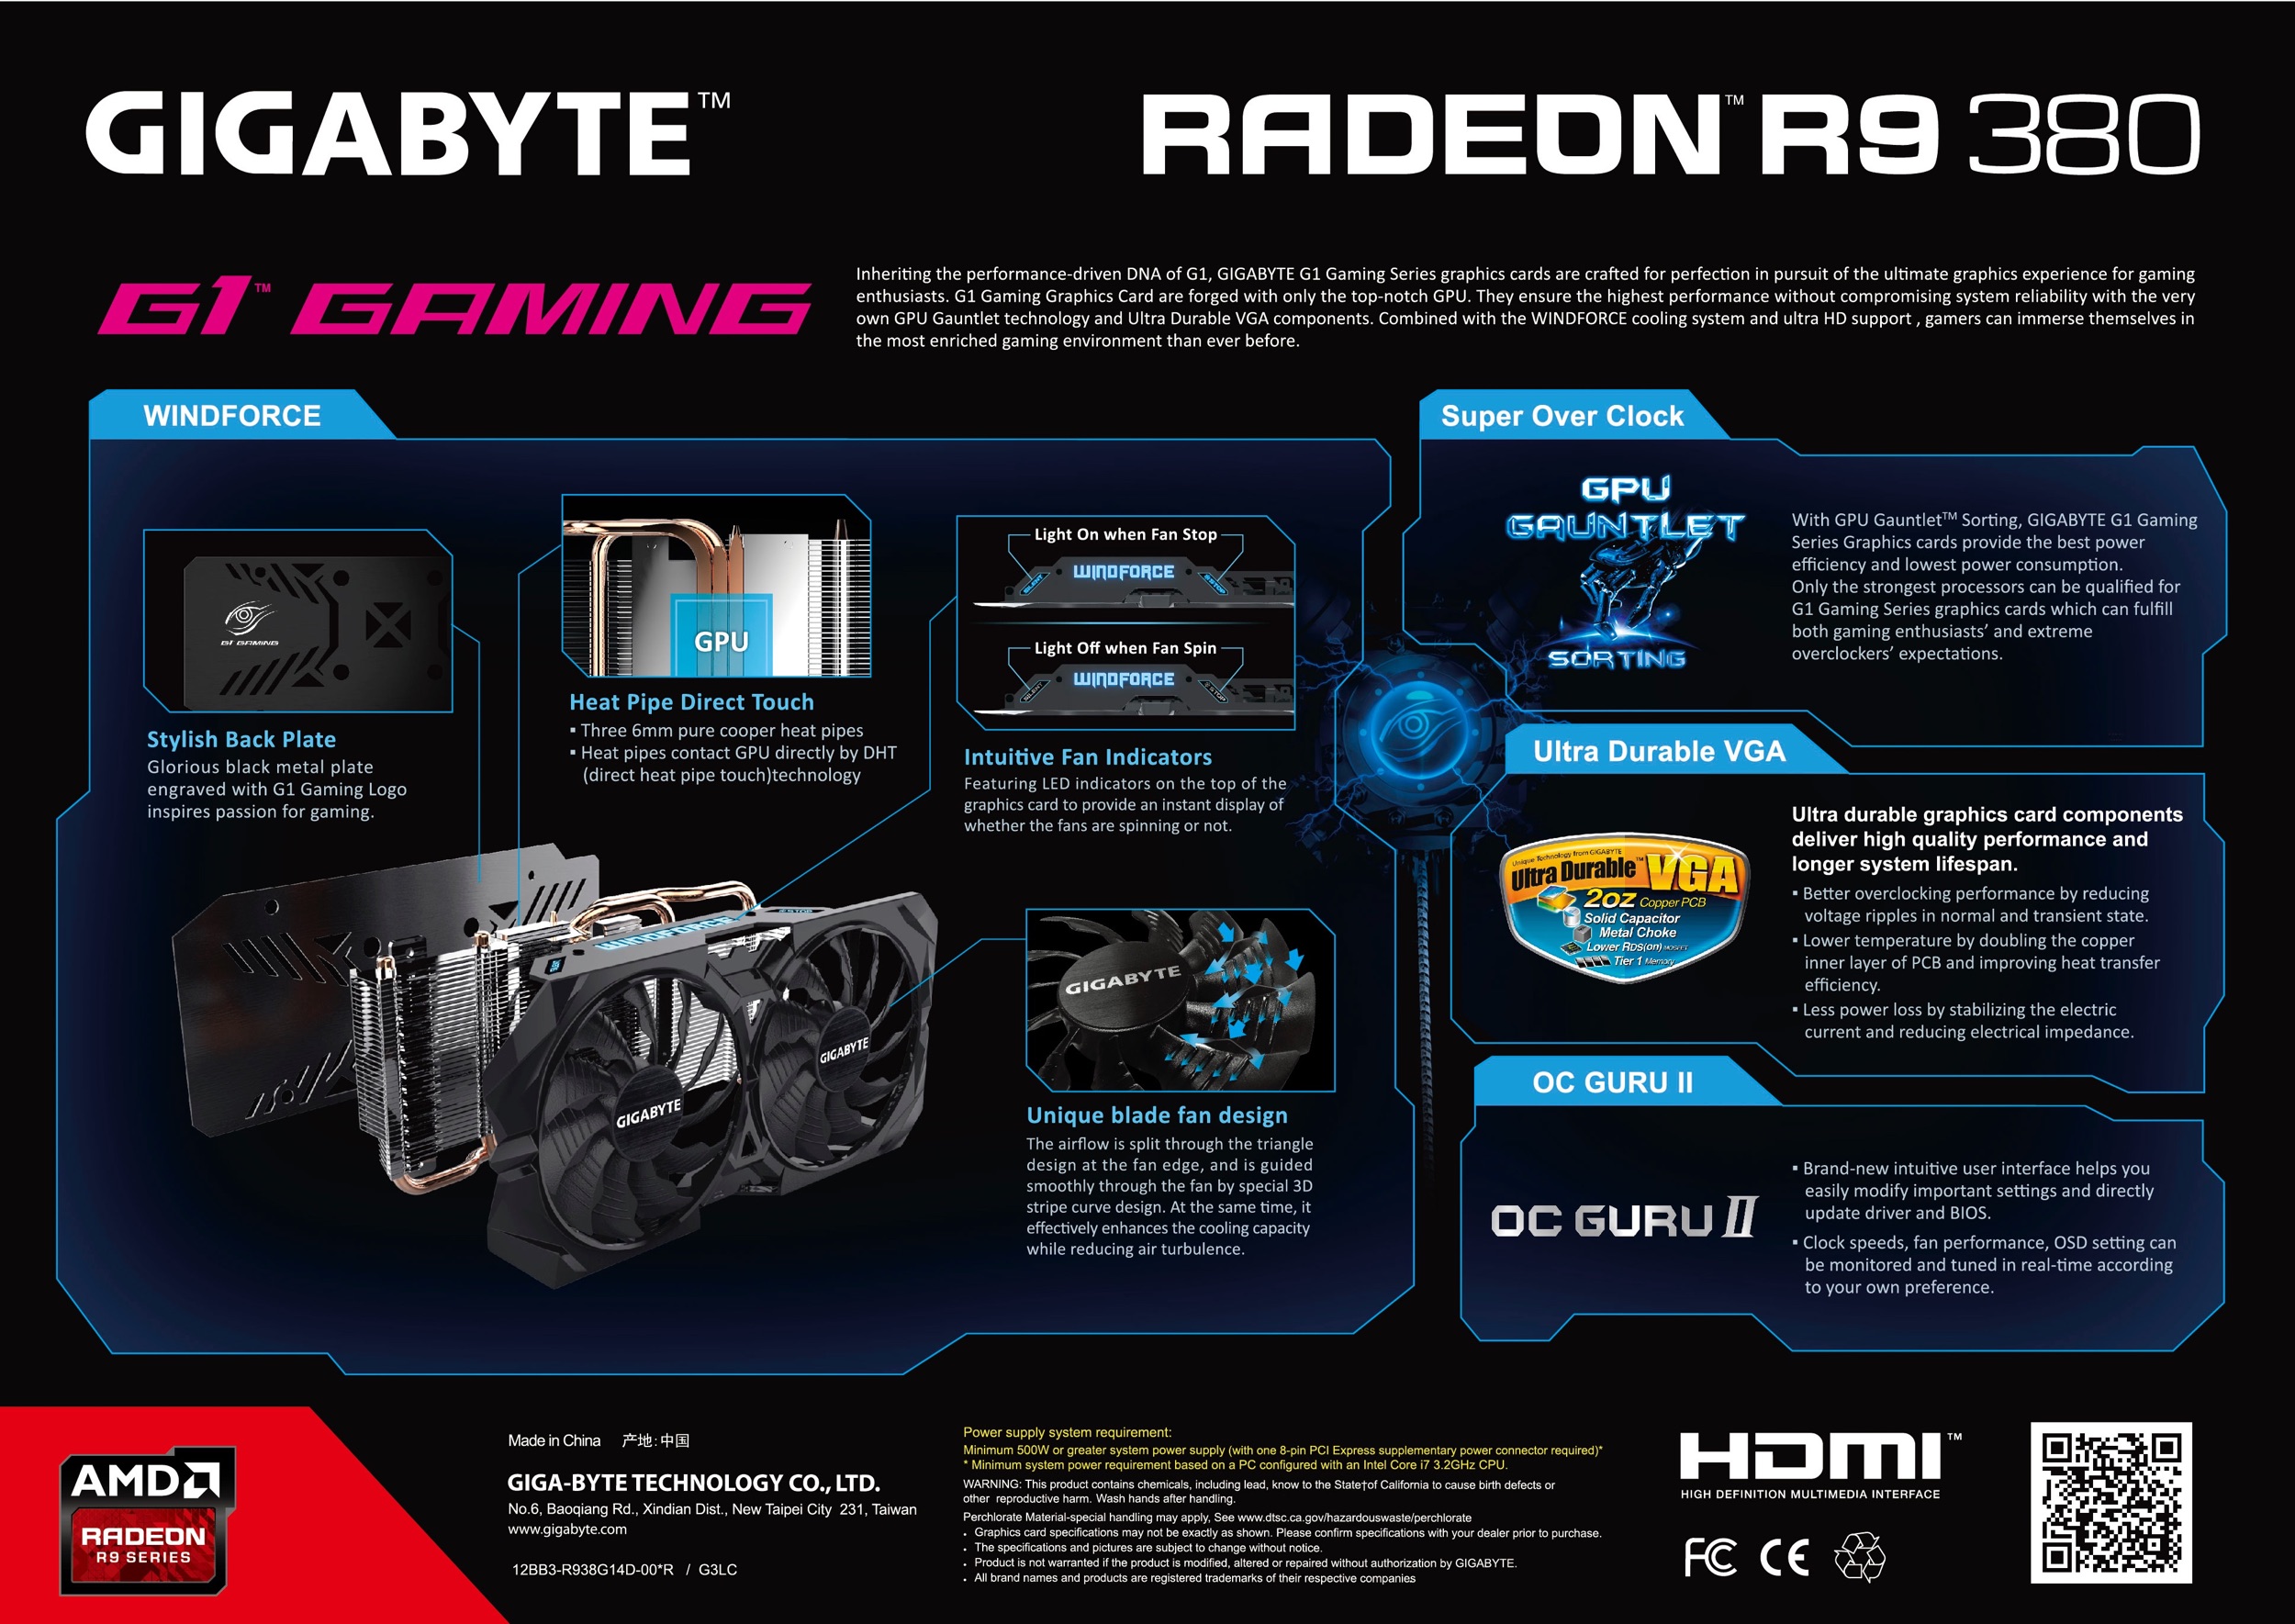 Media asset in full size related to 3dfxzone.it news item entitled as follows: Slide leaked dedicata alla Radeon R9 380 G1 GAMING di GIGABYTE | Image Name: news22661_Gigabyte-Radeon-R9-380-WindForce-II_1.jpg